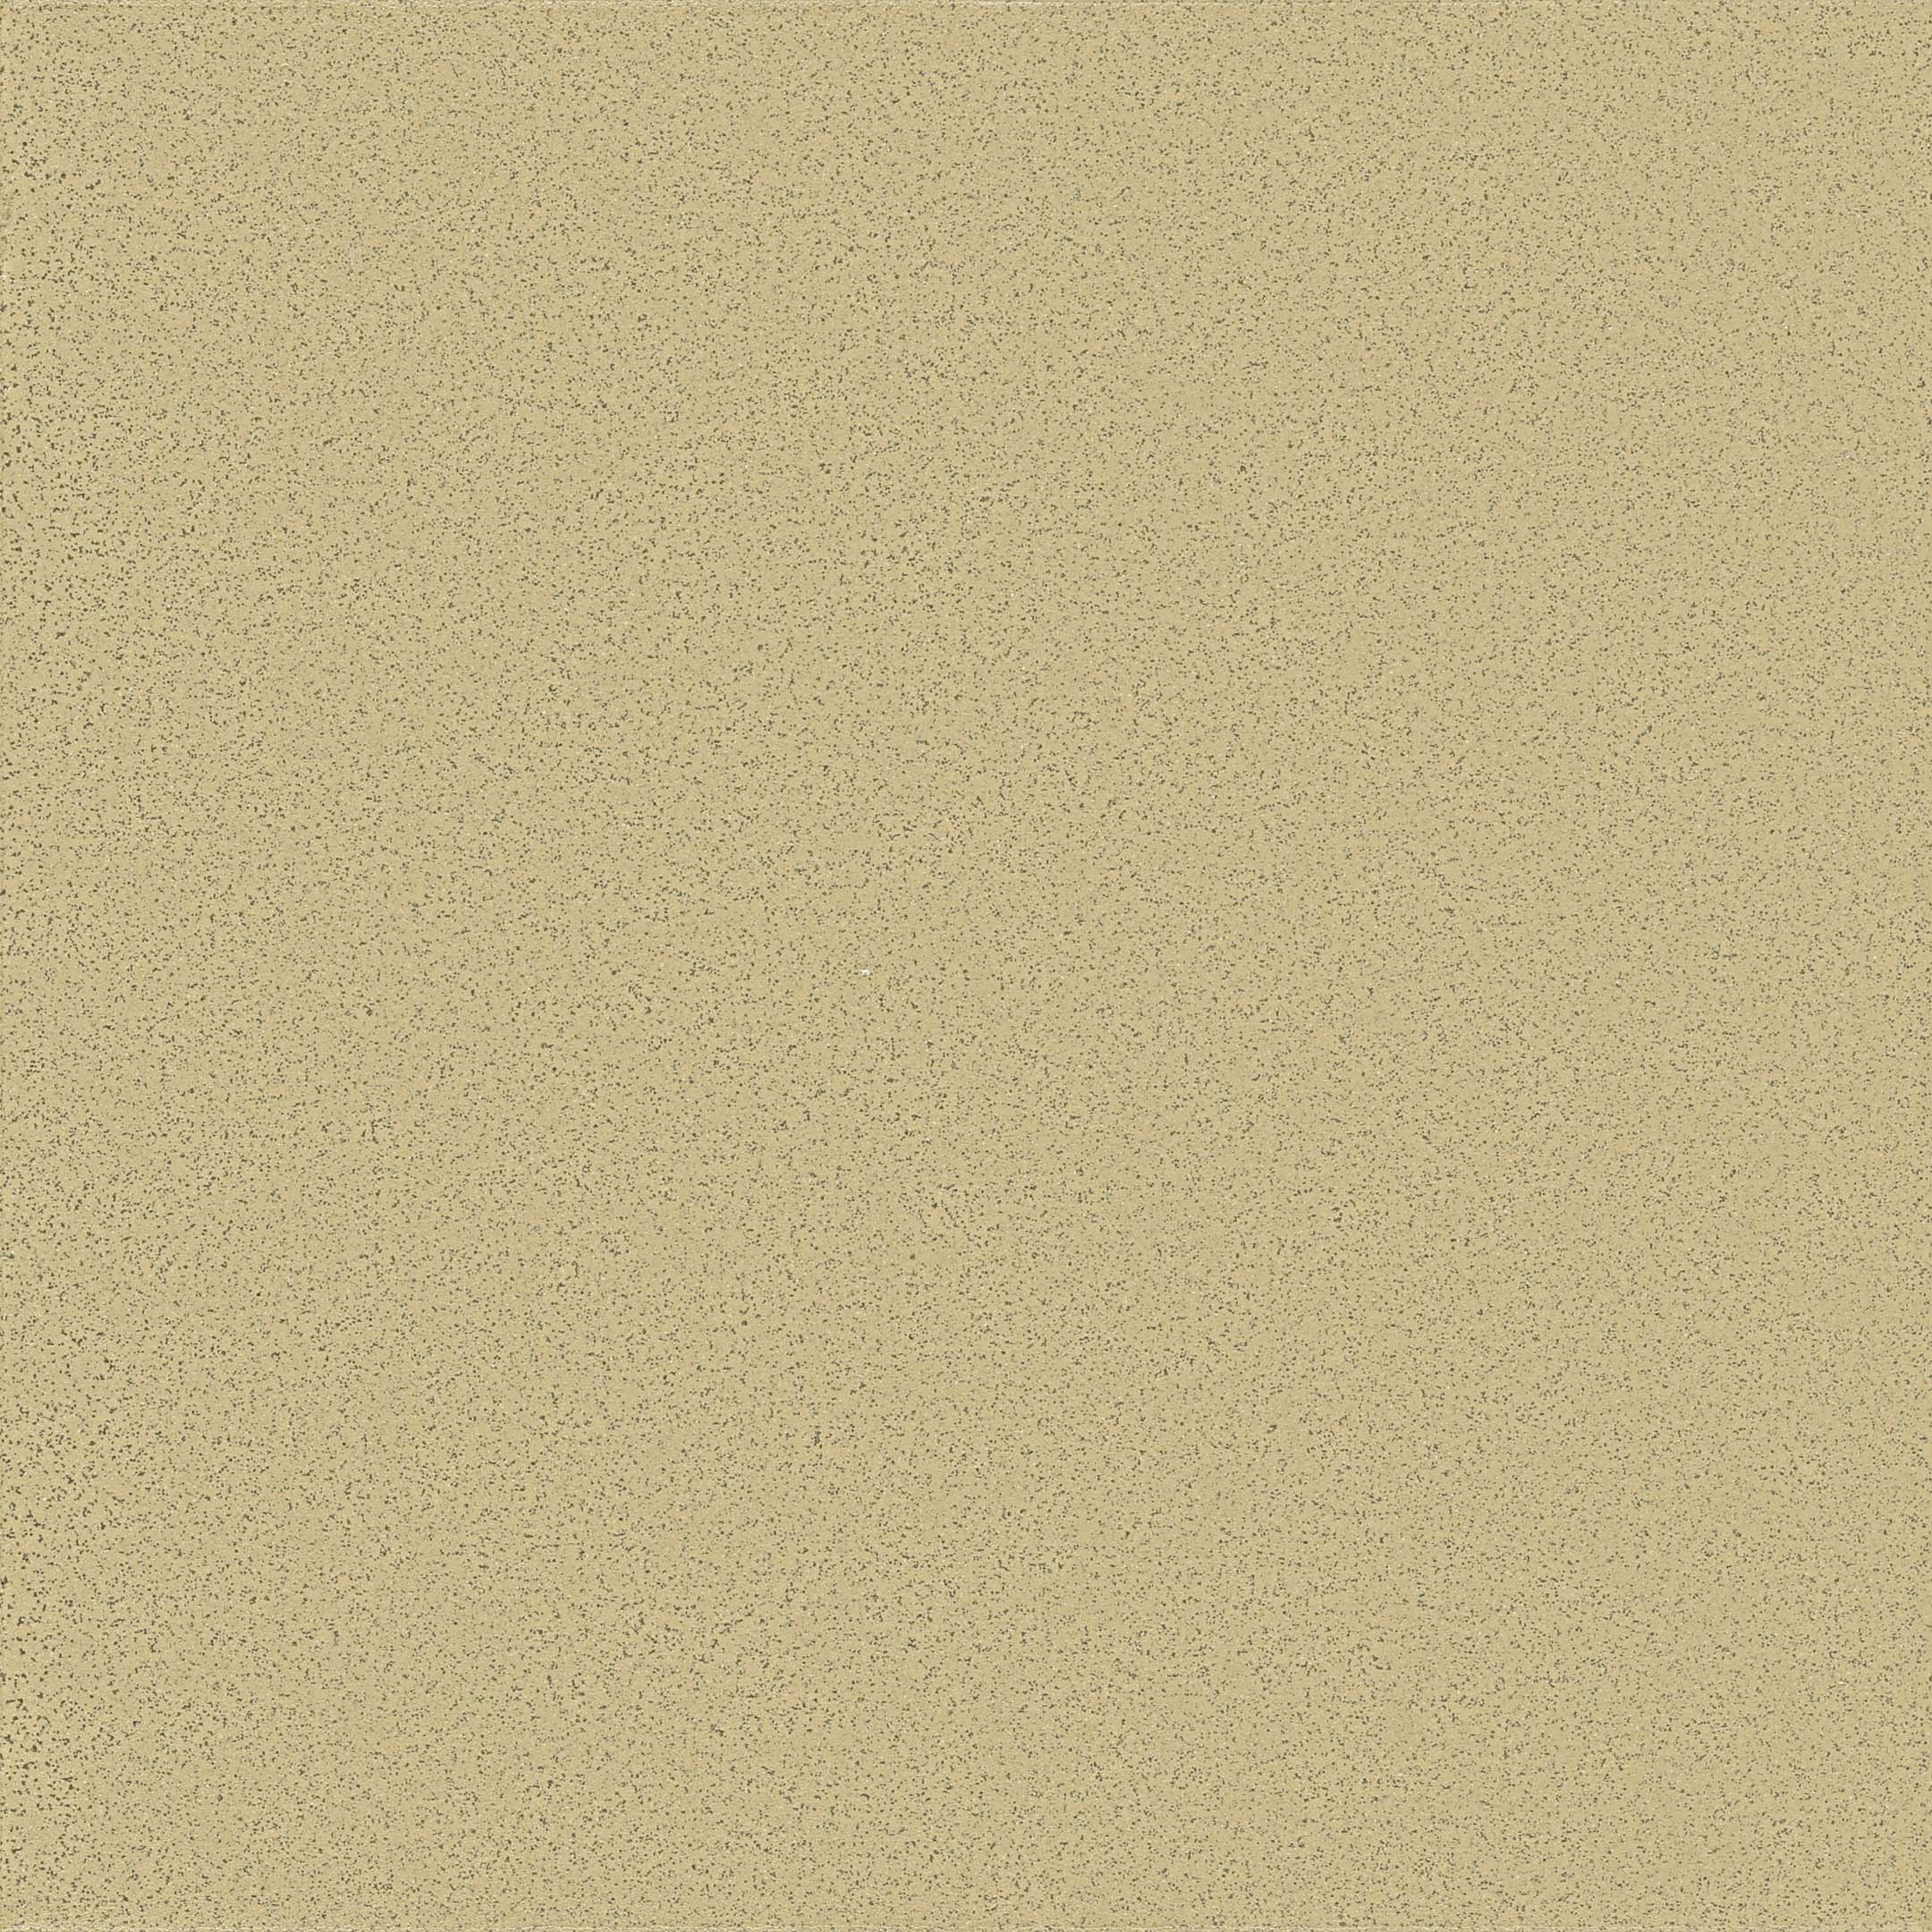 Керамогранит Quadro Decor Грес серый соль-перец 300х300х8 мм (16 шт.=1,44 кв.м) керамогранит quadro decor соль перец 30x30 см 1 44 м2 неполированный цвет серый